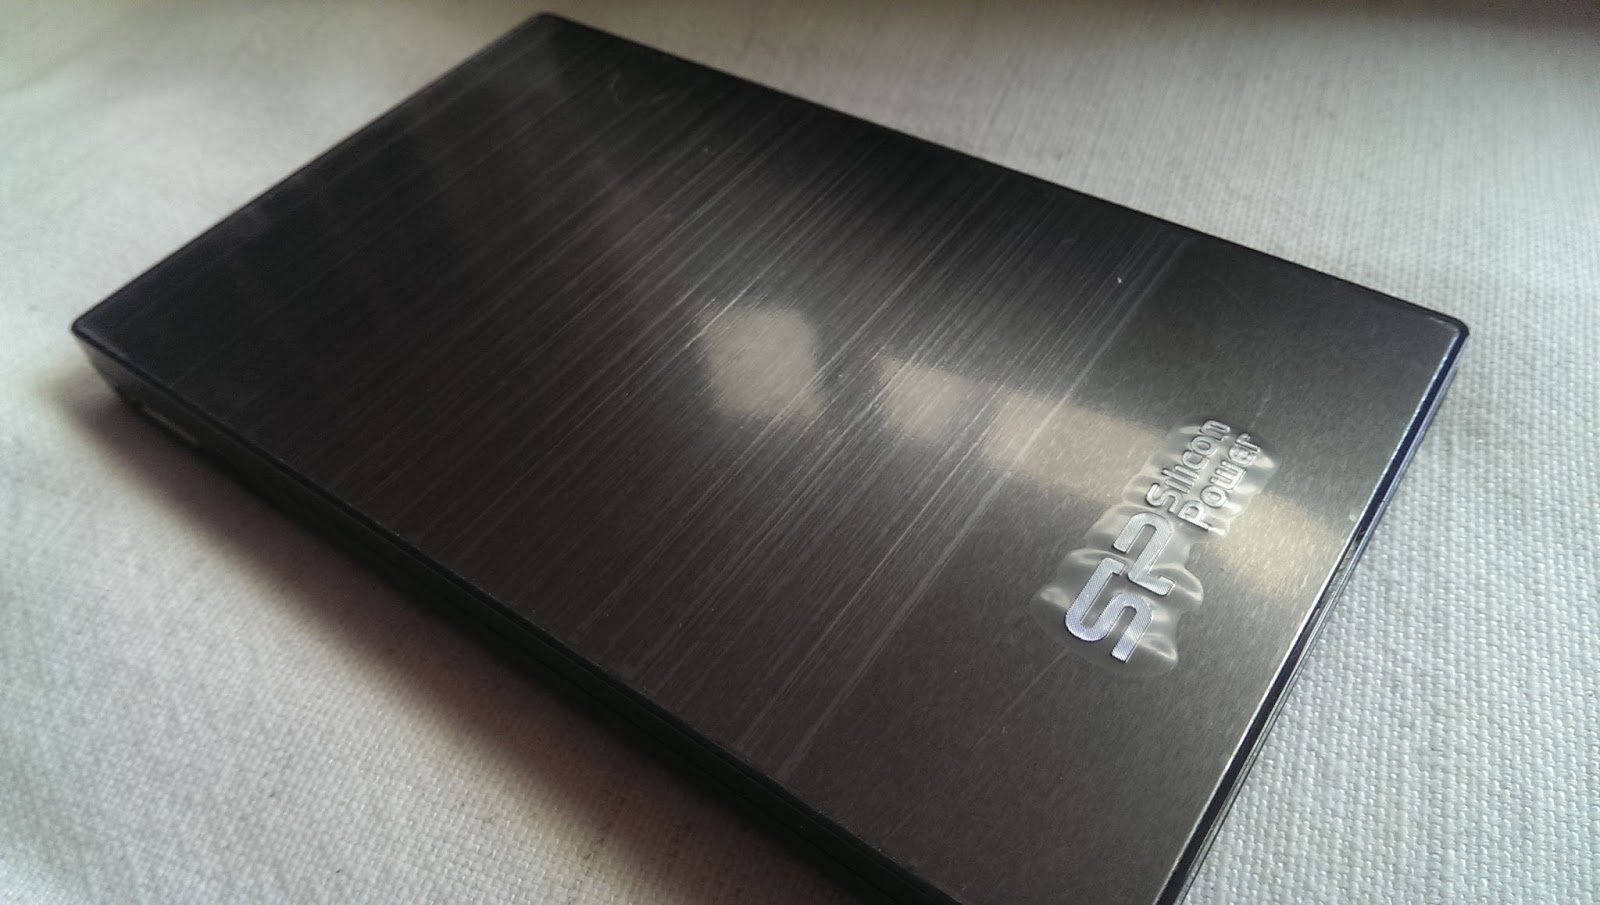 2015 05 30%2B10.47.12 - [開箱] SP Silicon Power 1TB 金屬髮絲紋行動硬碟